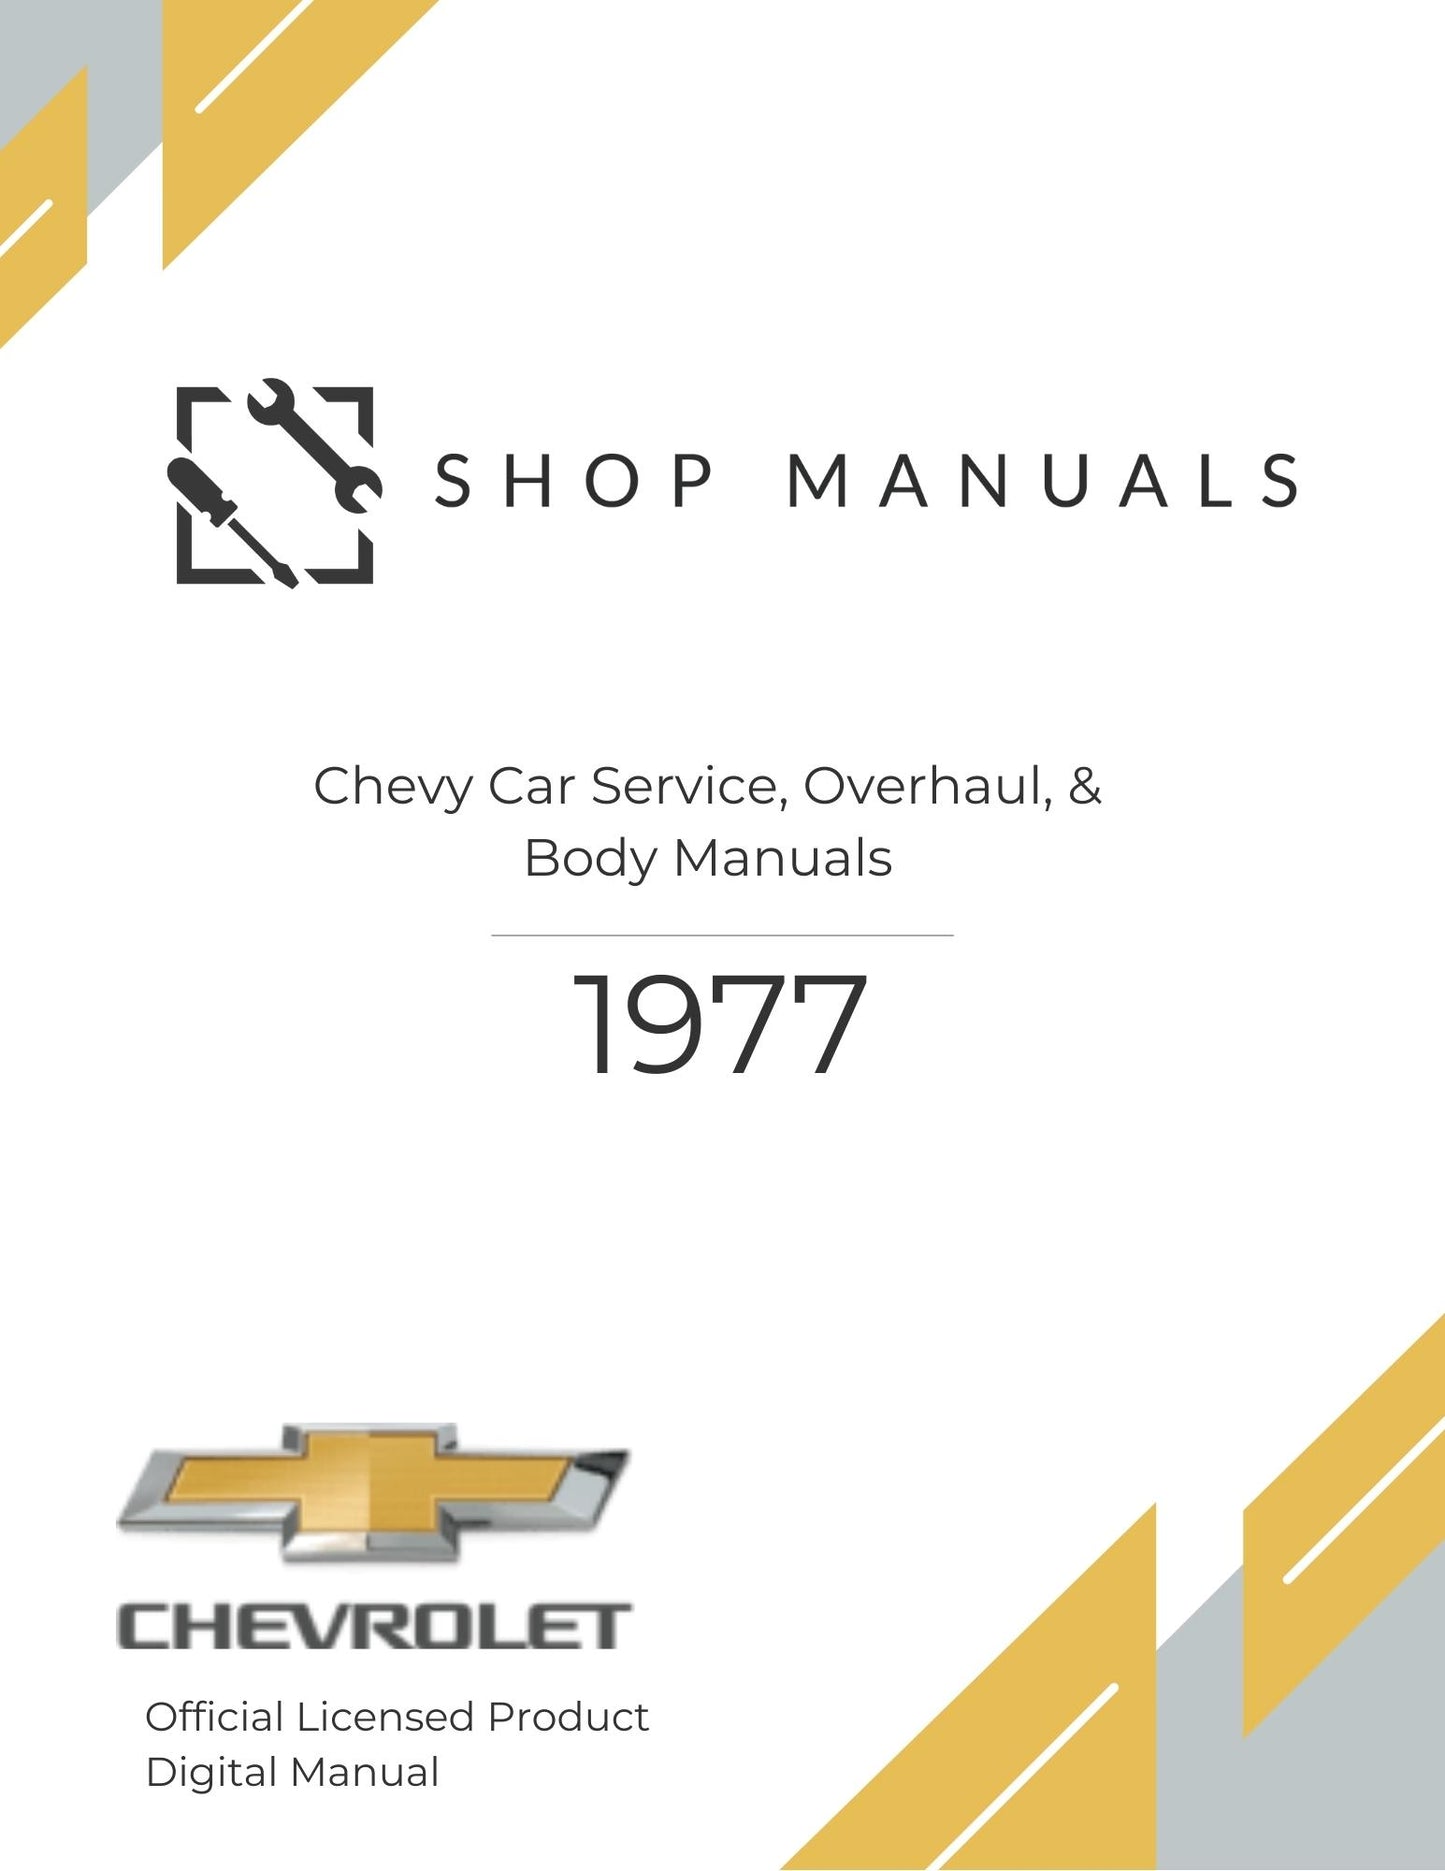 1977 Chevy Car Service, Overhaul, & Body Manuals